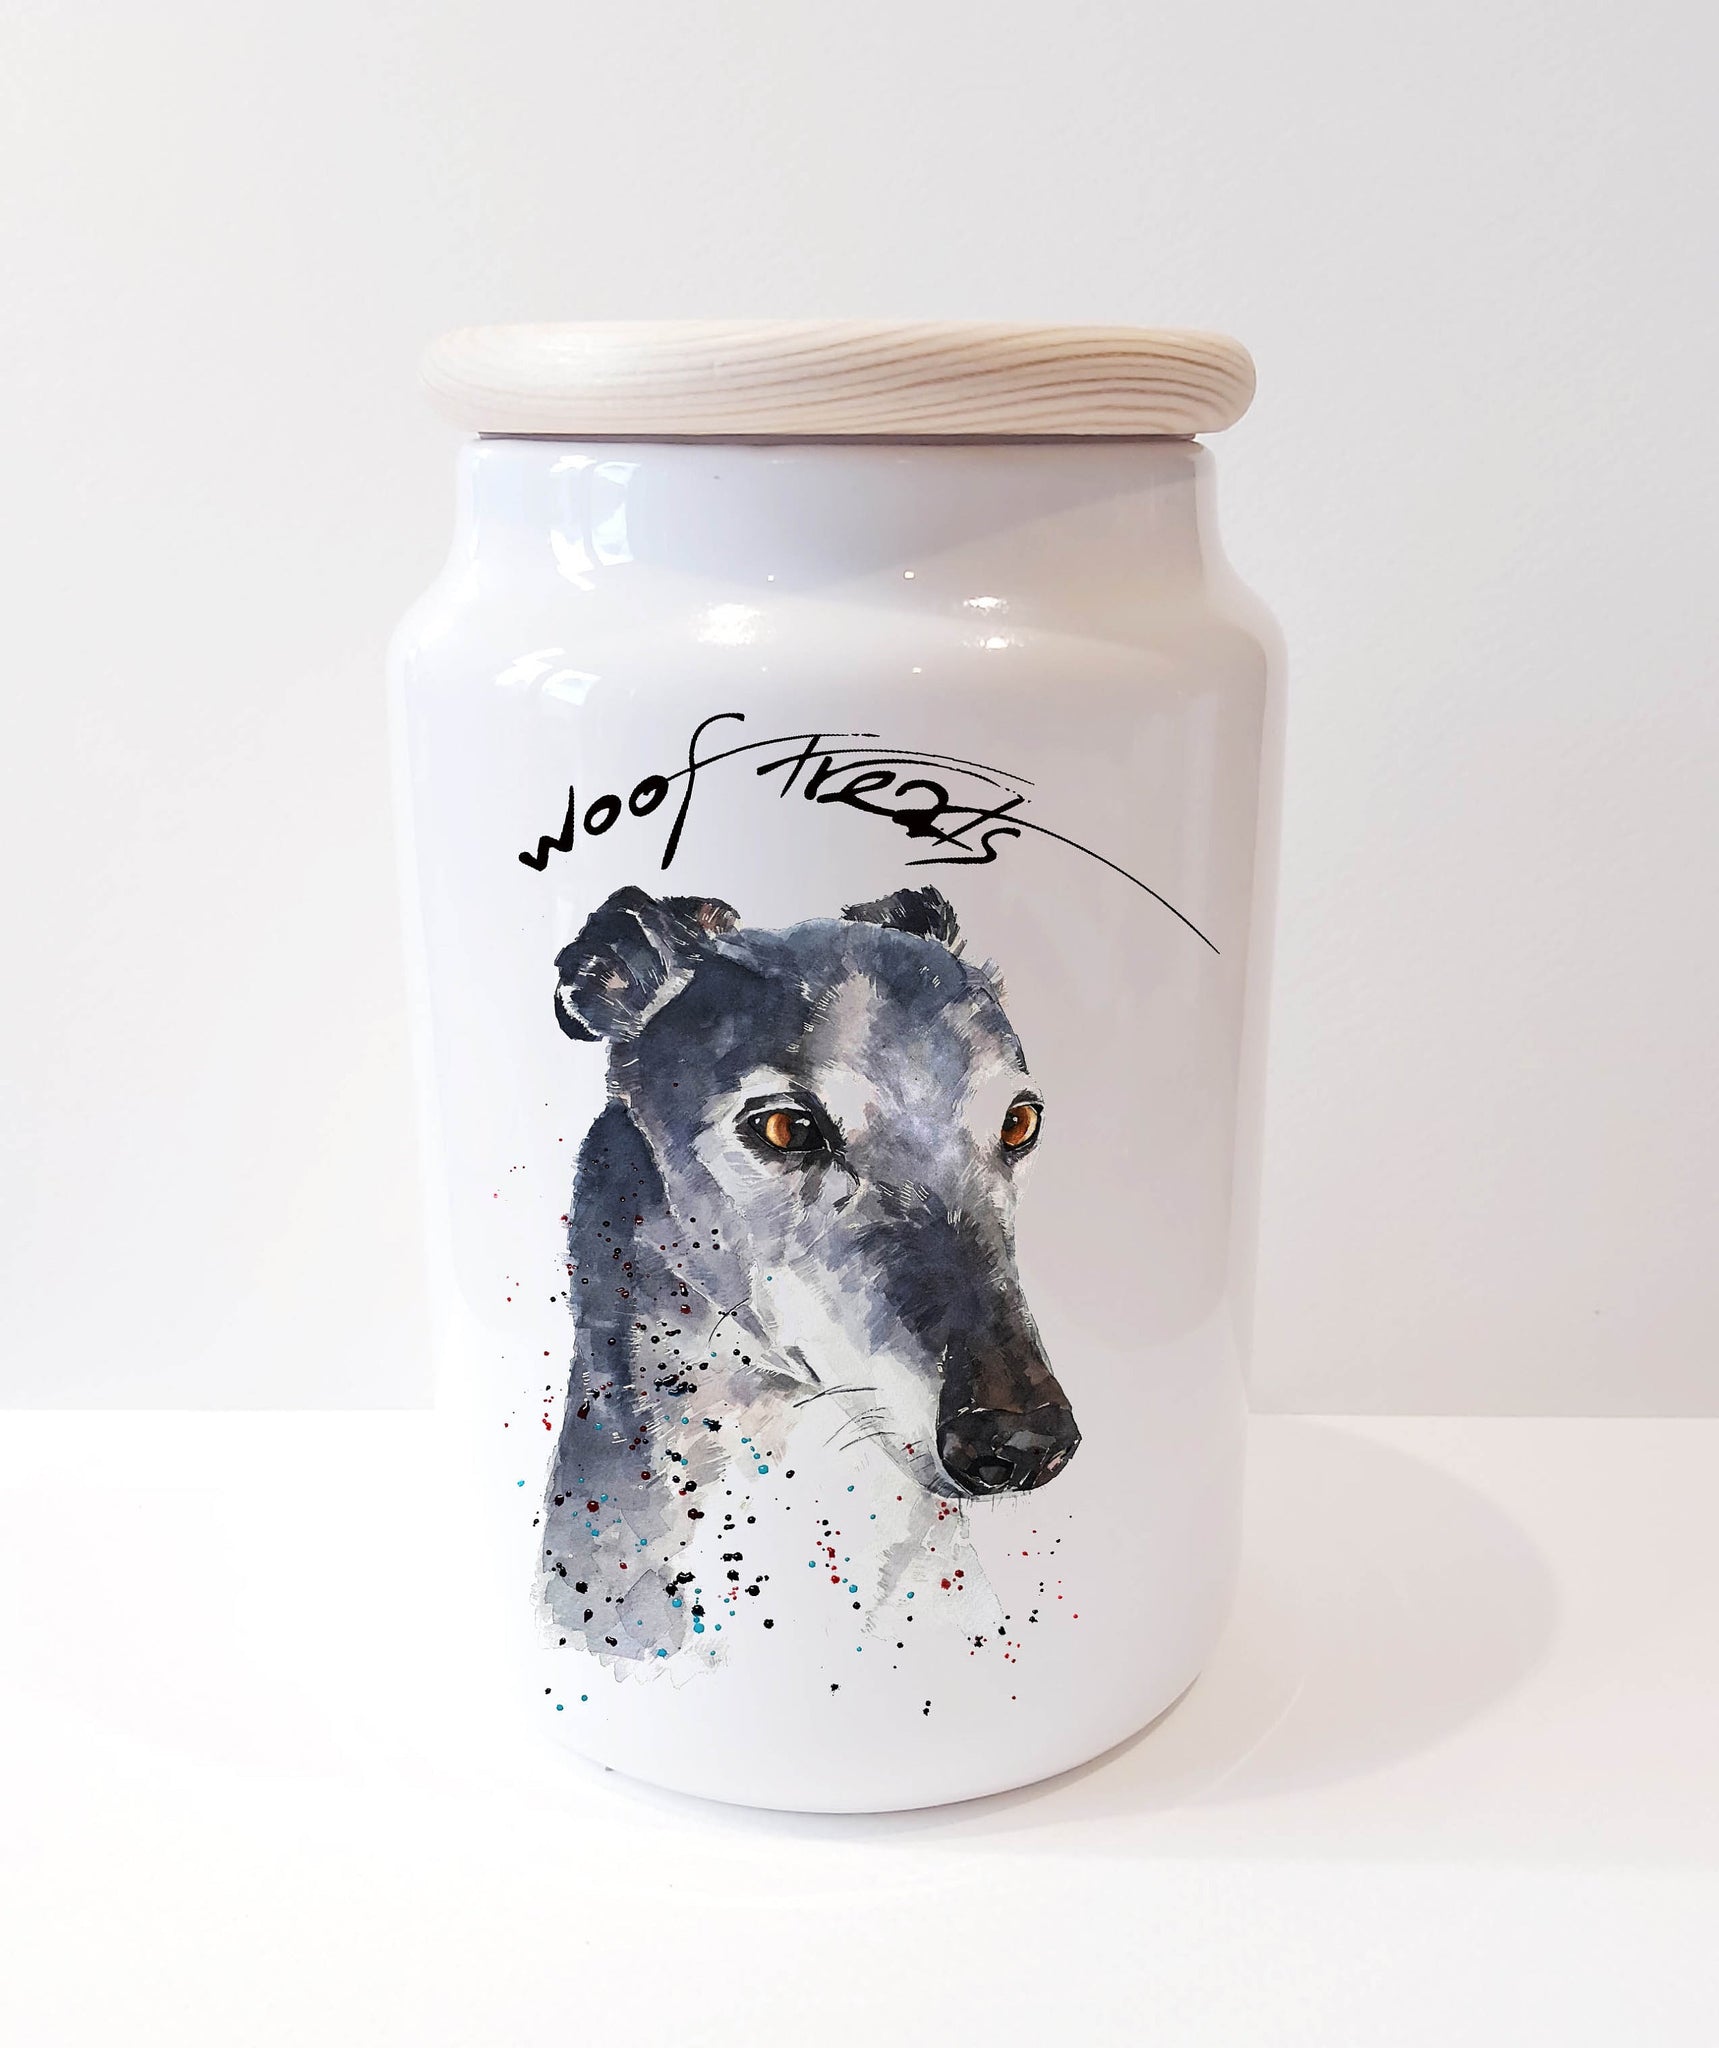 Balance and Poise whippet Ceramic Treats Jar.whippet Canister,whippet dog jar,whippet snack jar,sighthound treats, sighthound jar